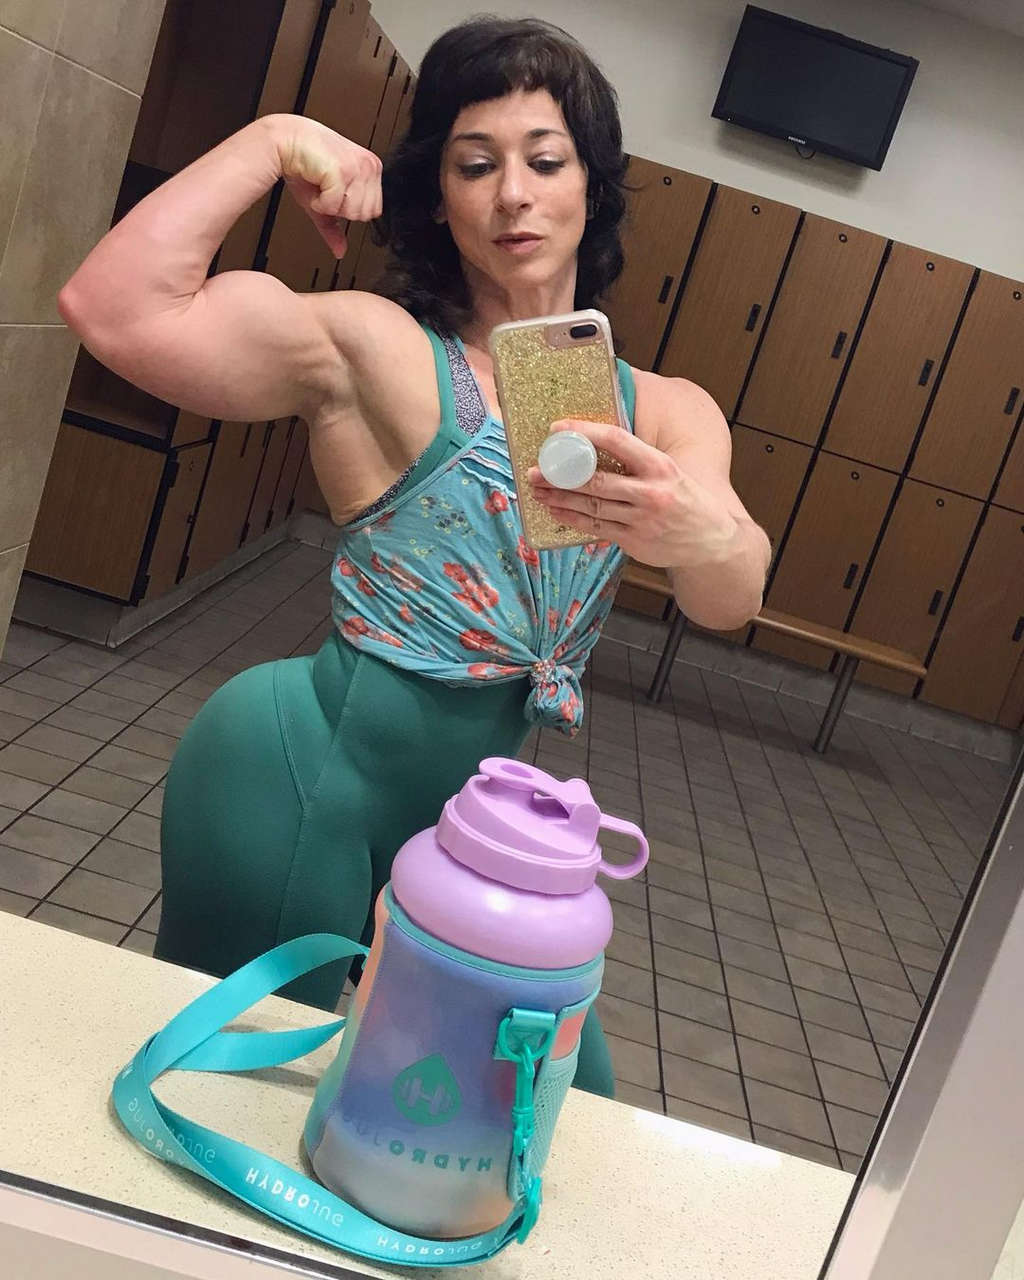 Jodi Miller Muscles